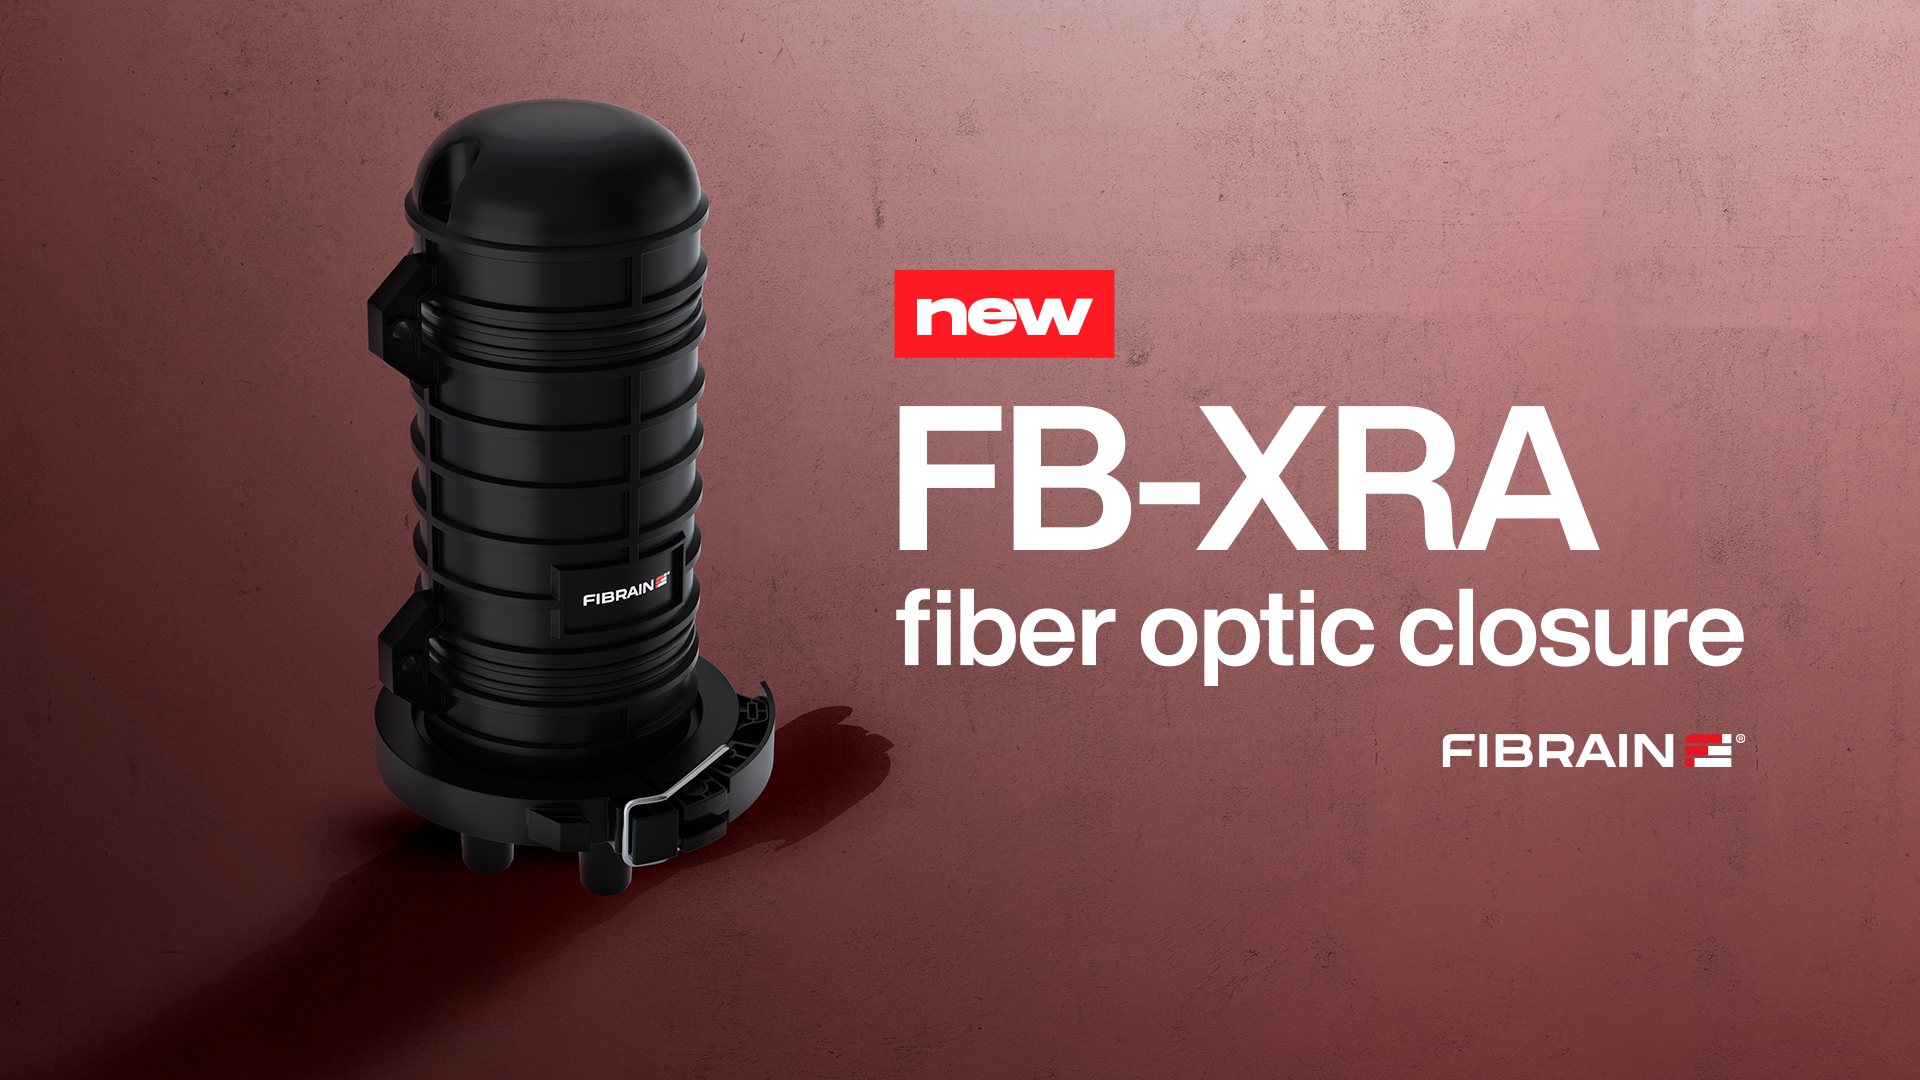 FIBRAIN FB-XRA fiber optic closure